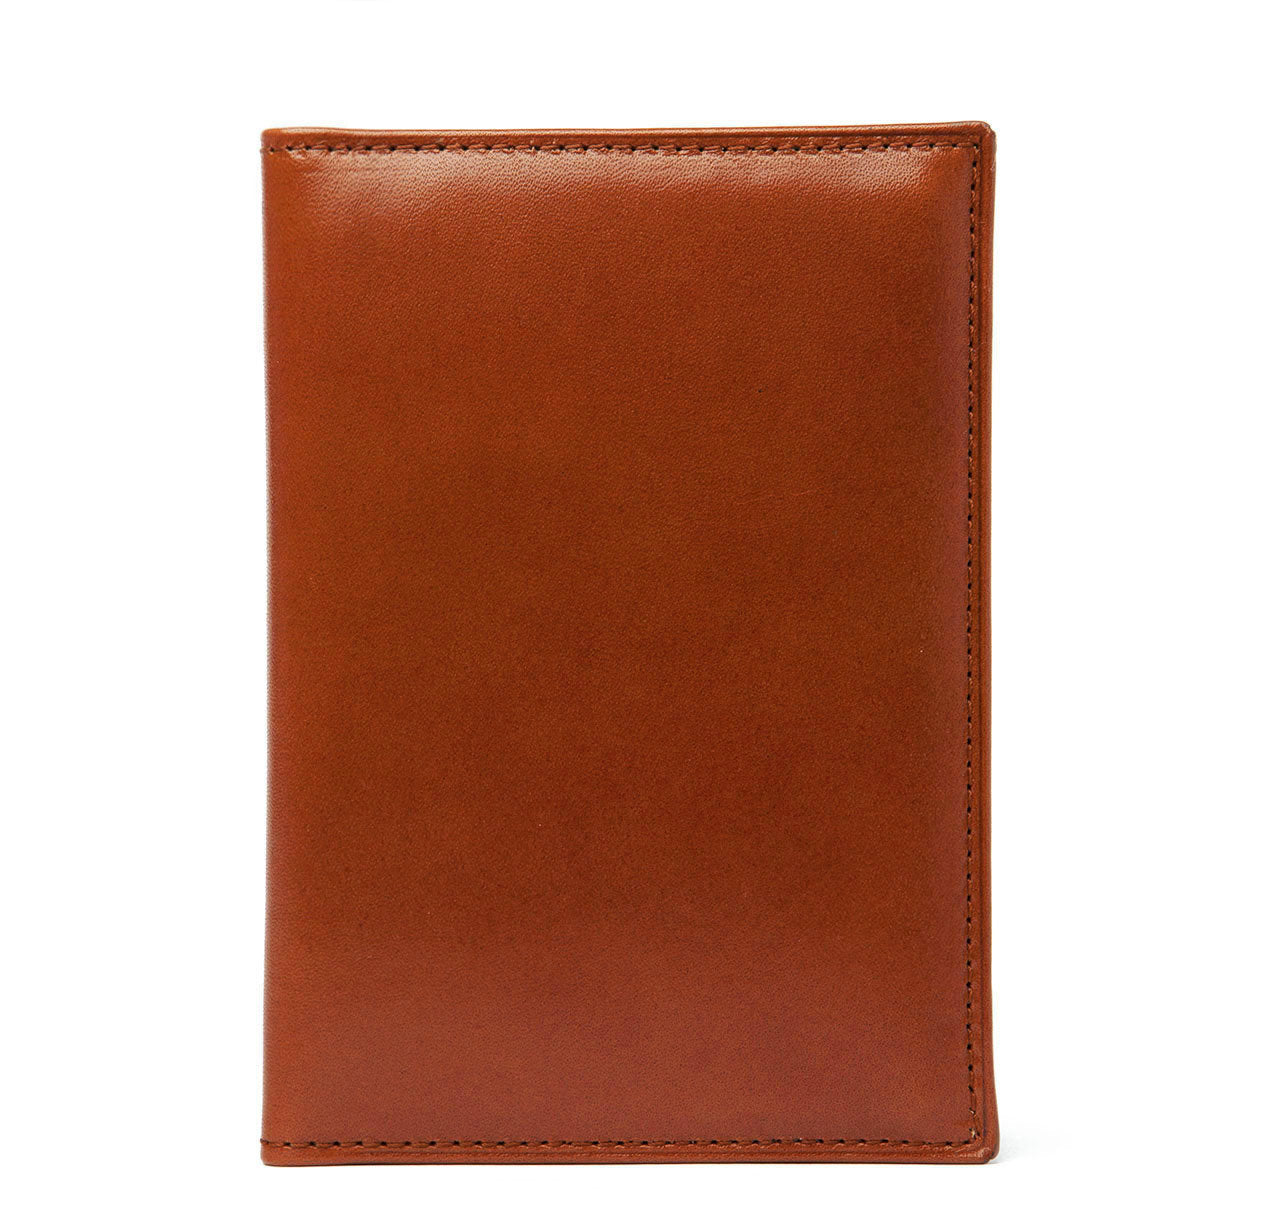 Cognac Leather Passport Holder